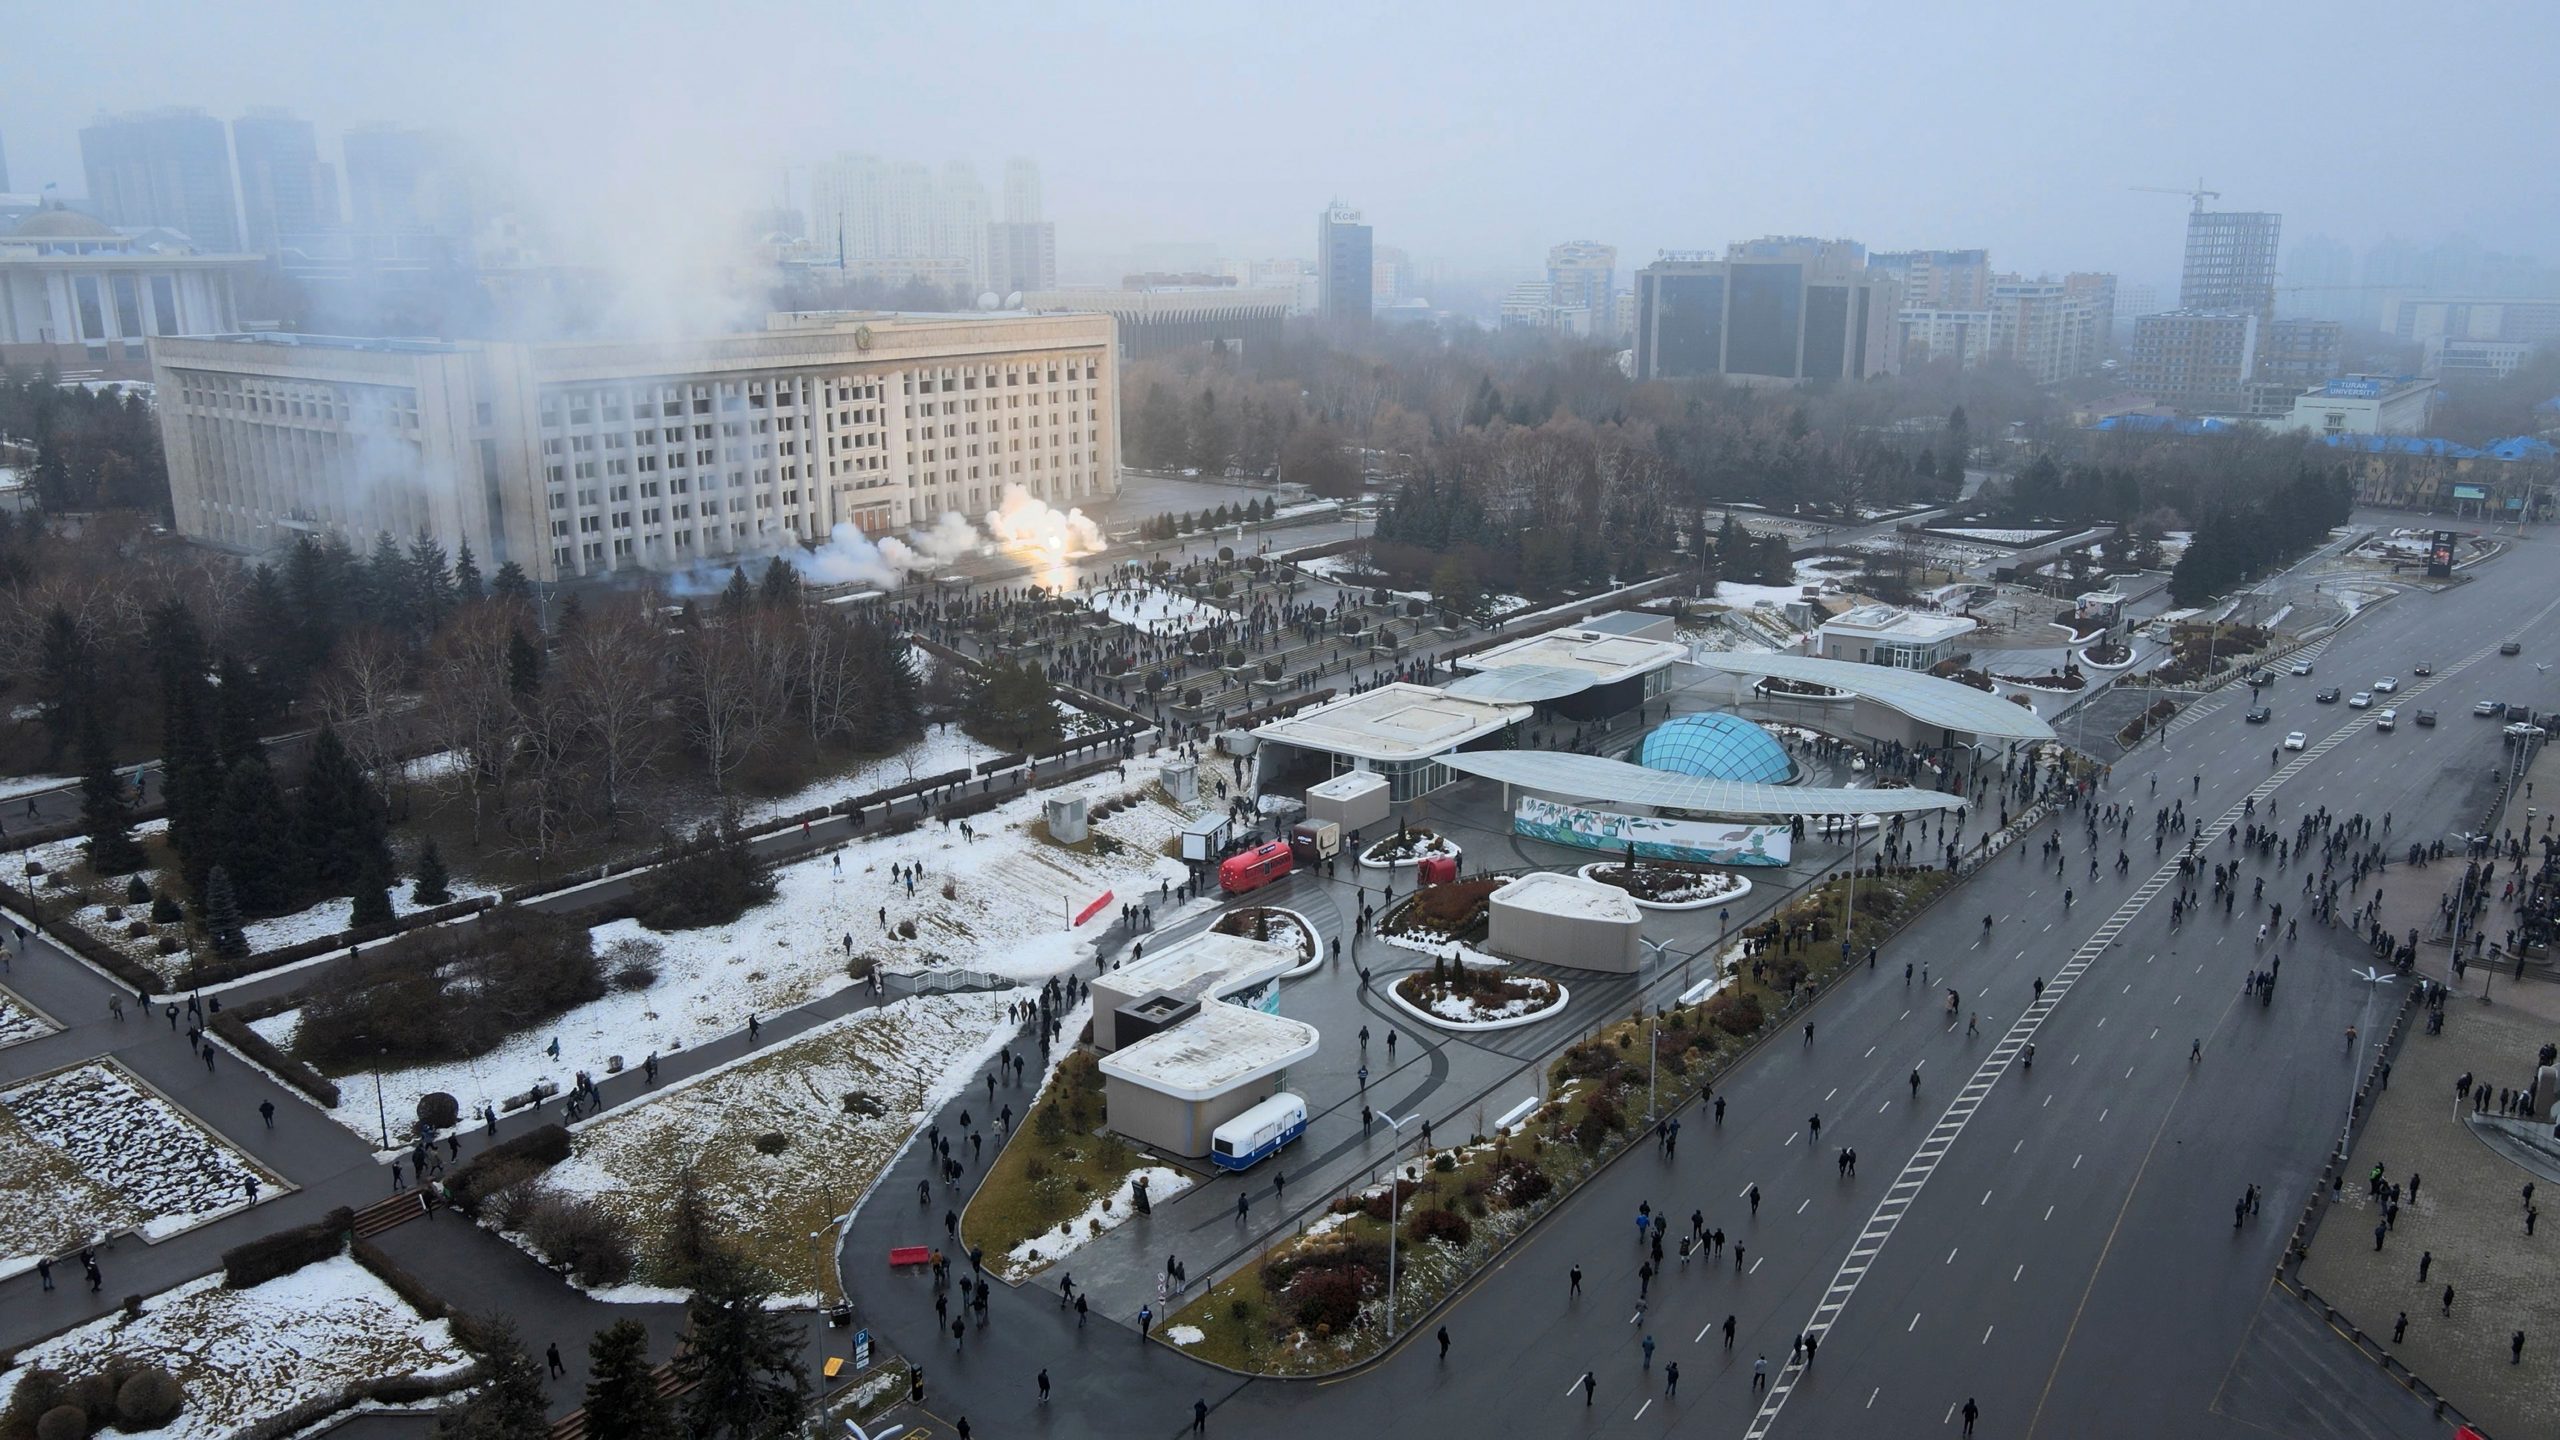 Kazakh President’s house set ablaze by anti-government protesters